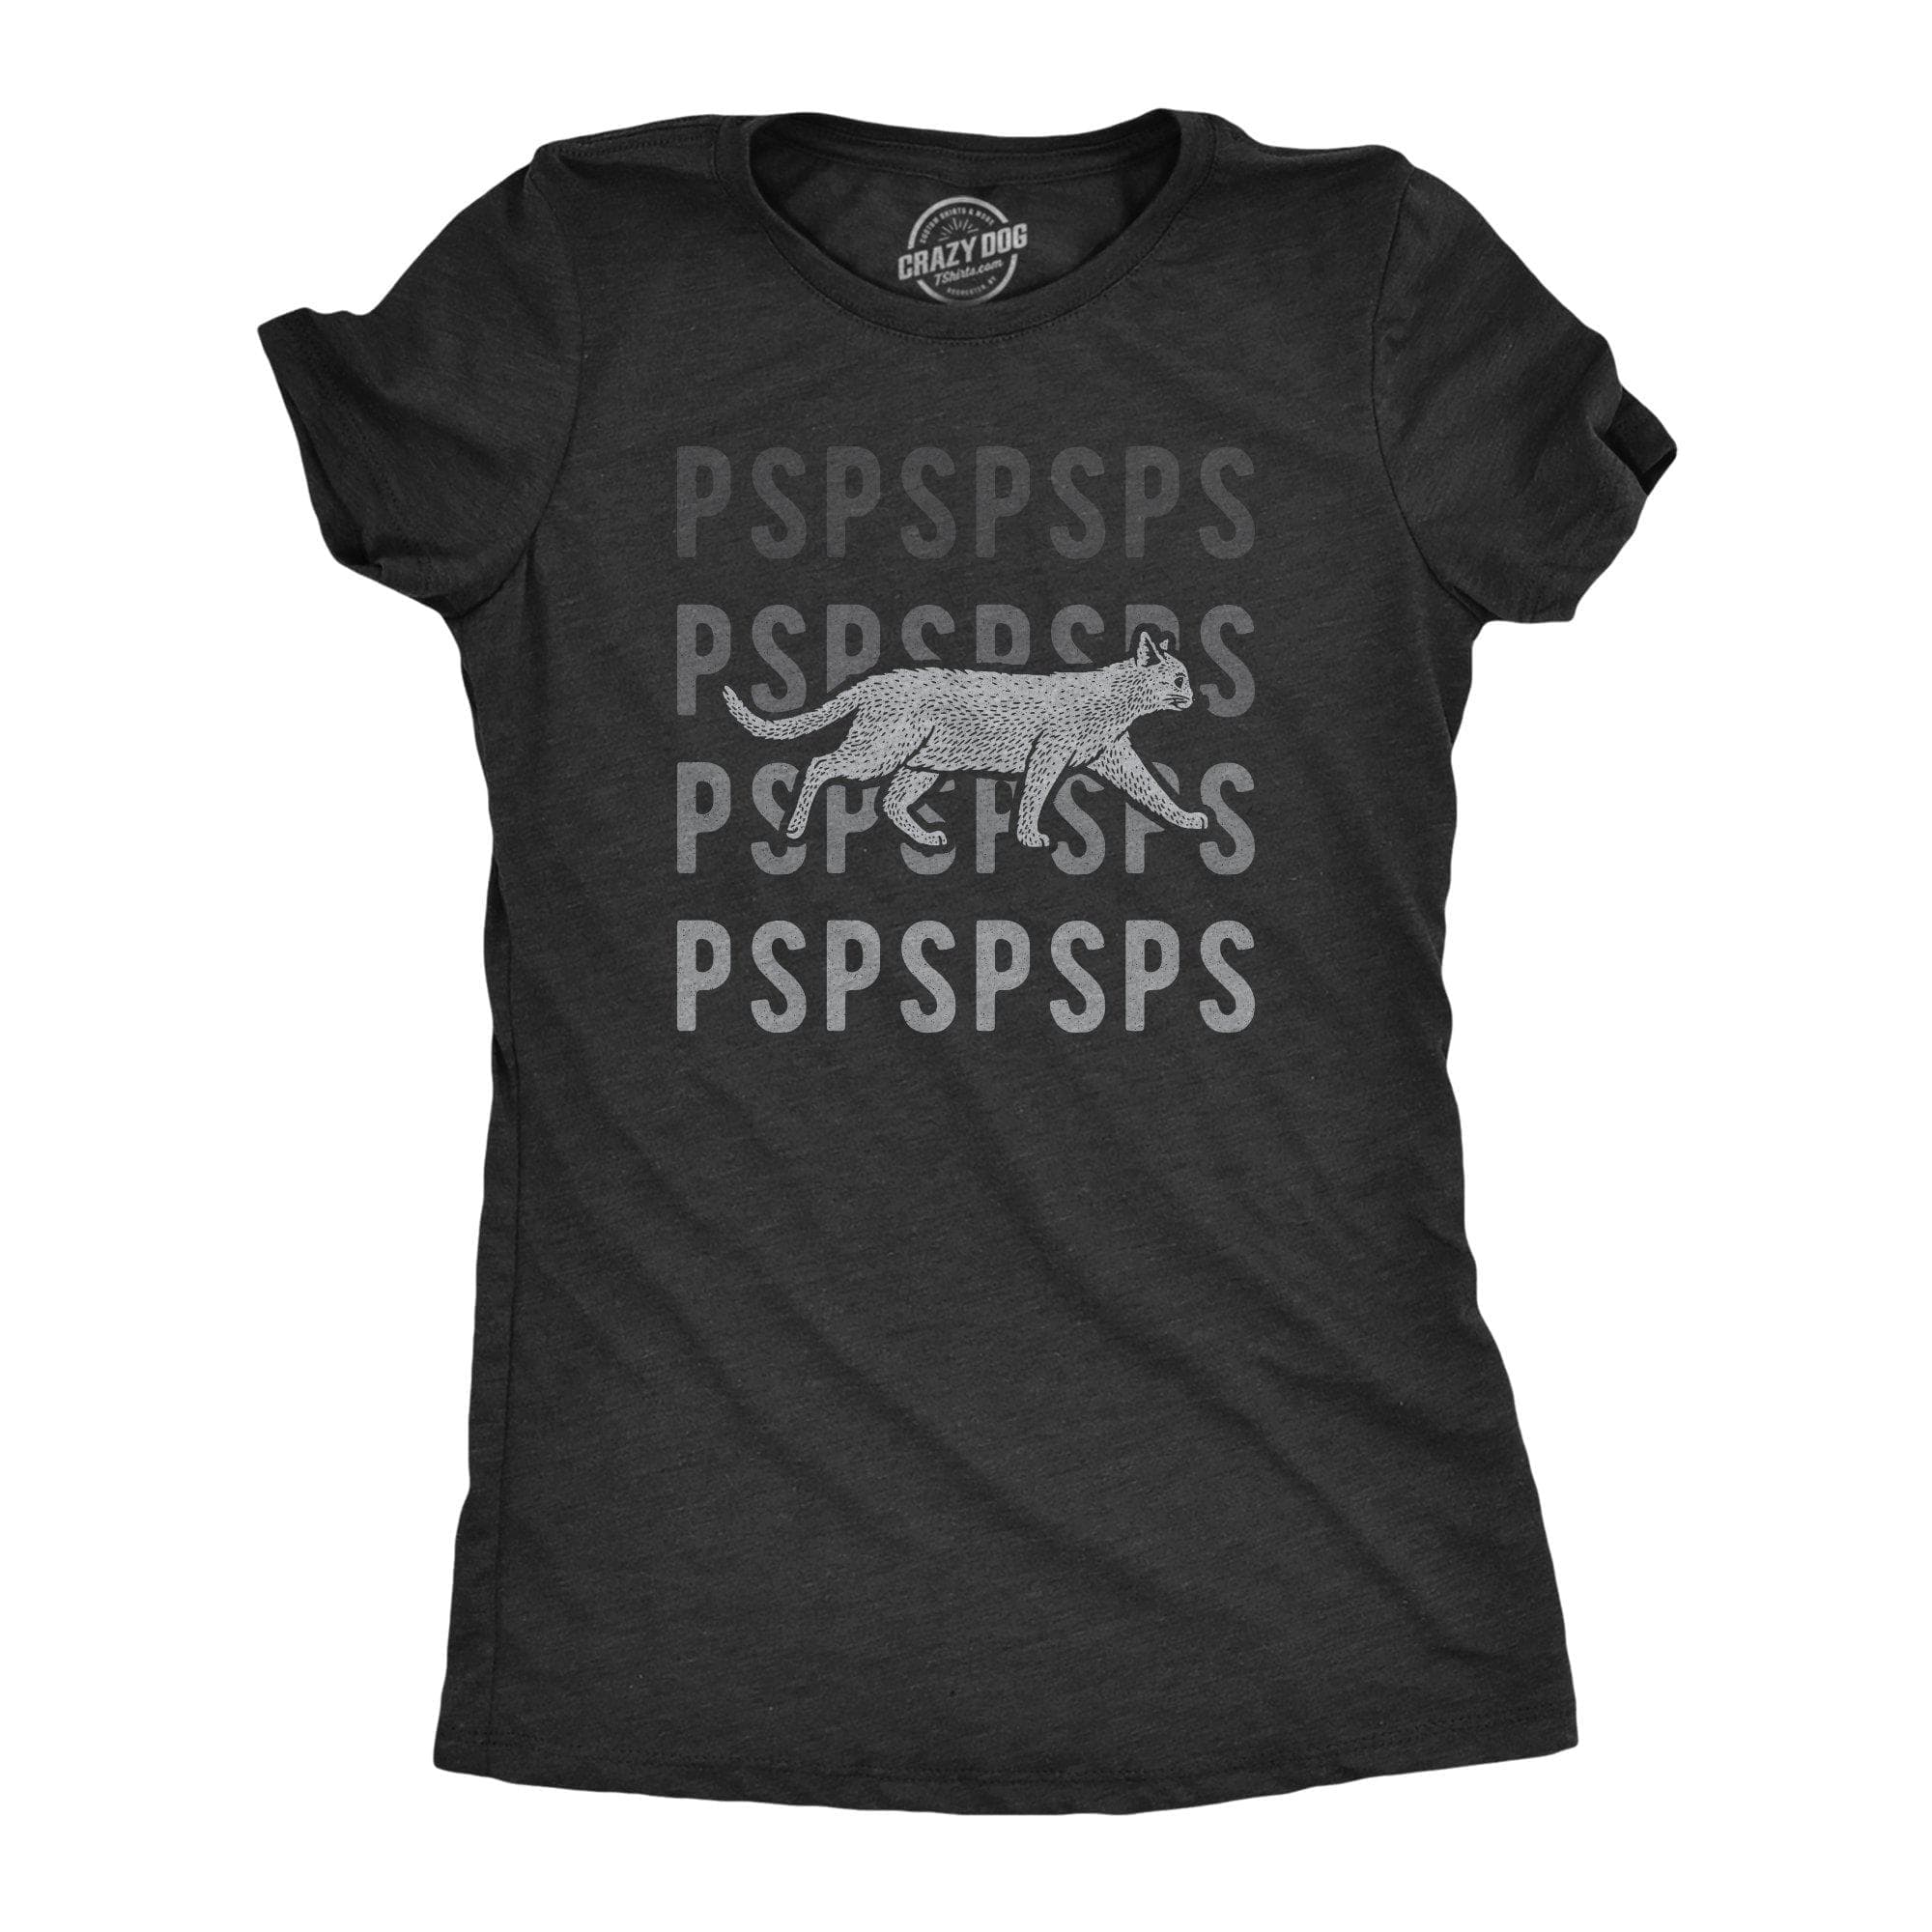 Pspspsps Women's Tshirt - Crazy Dog T-Shirts